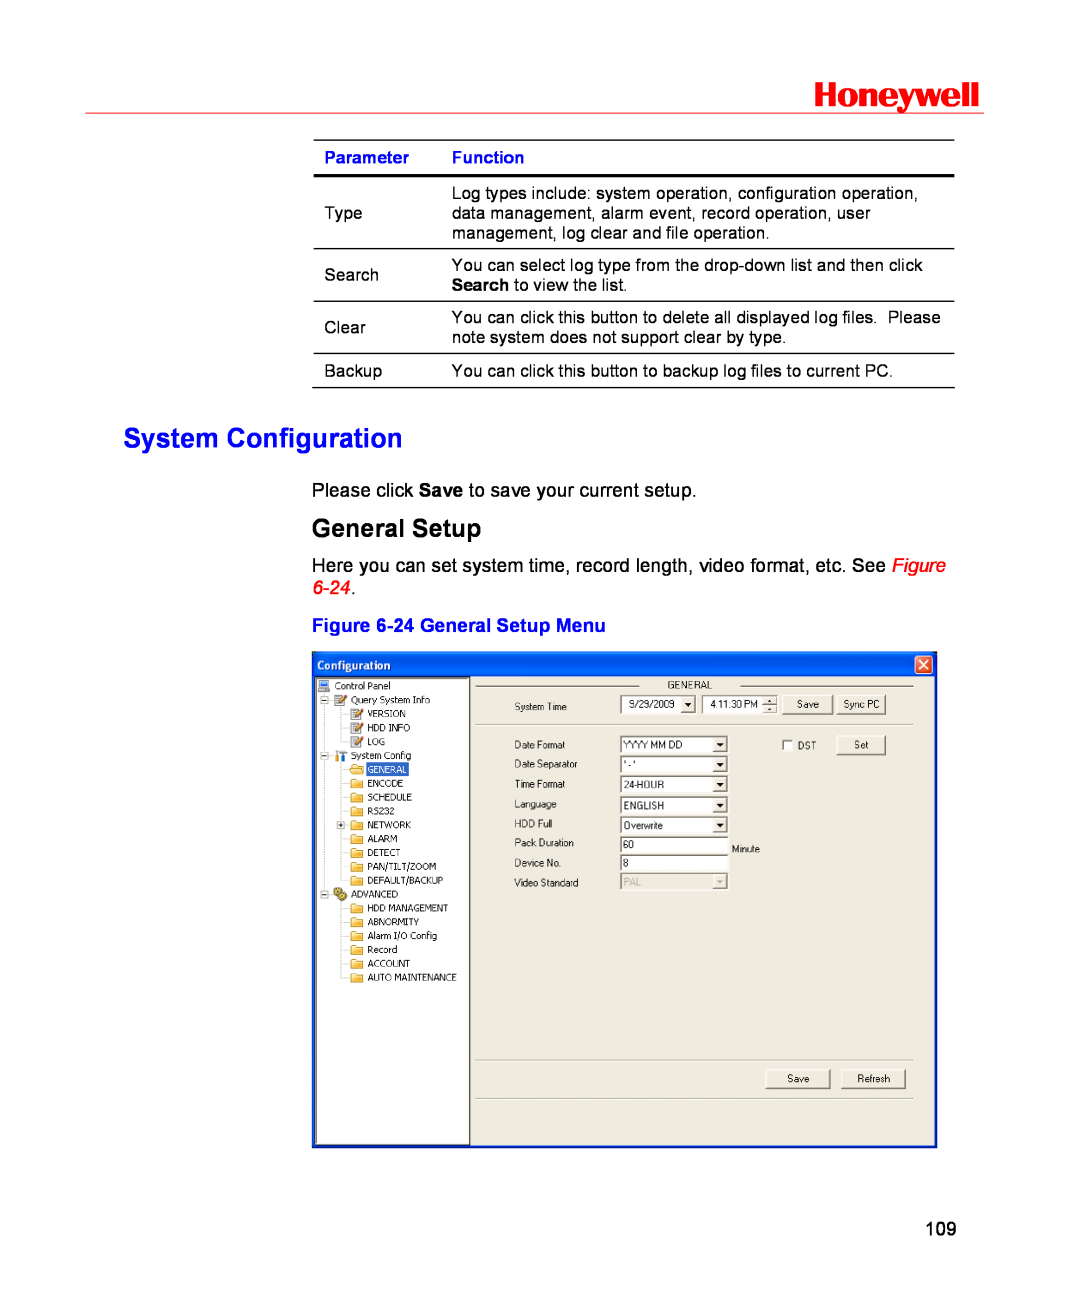 Honeywell HSVR-16, HSVR-04 user manual System Configuration, Honeywell, 24 General Setup Menu, Parameter, Function 